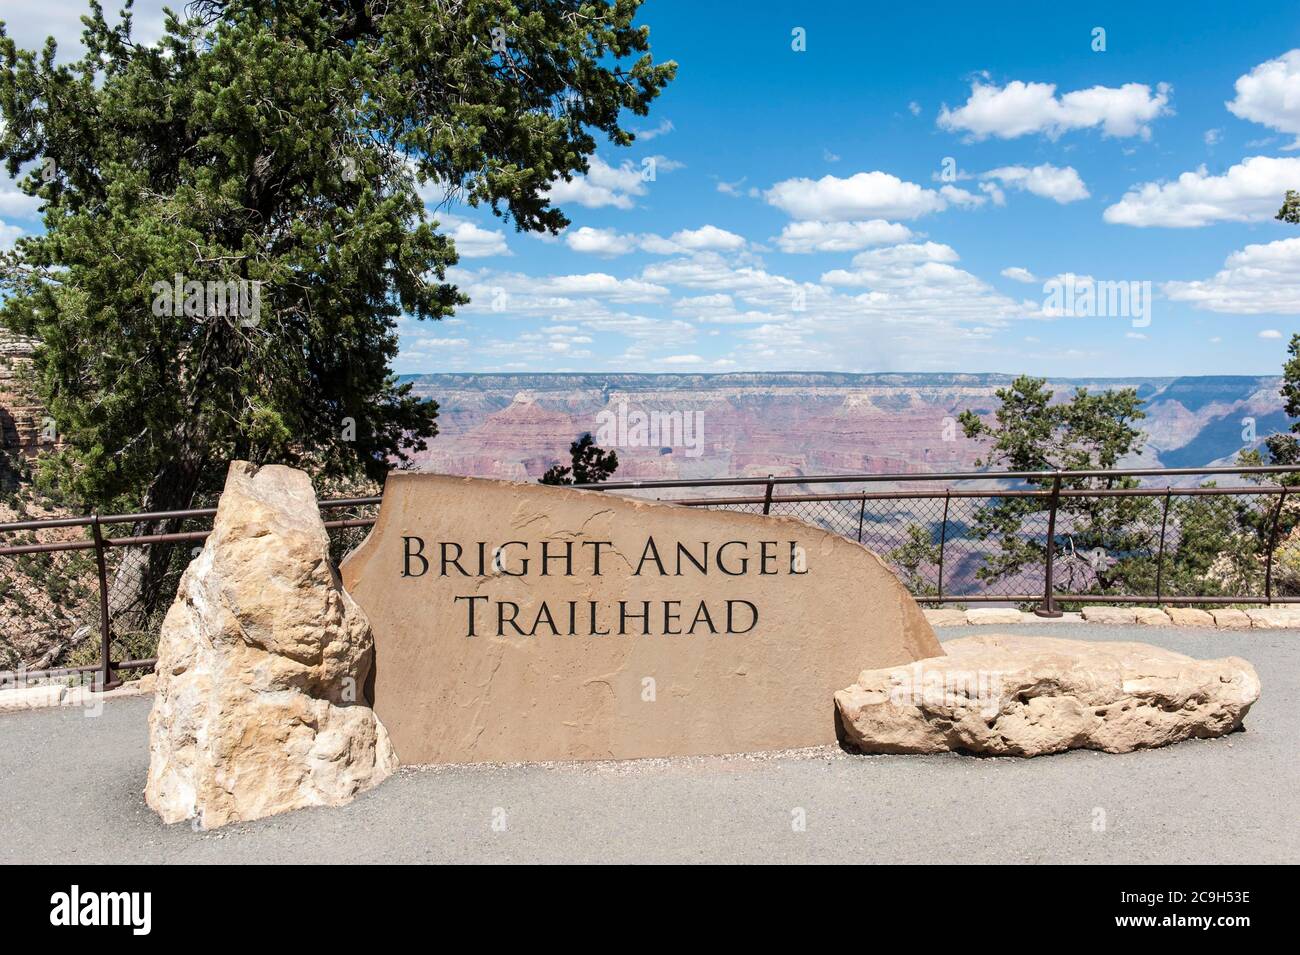 Ausgangspunkt Bright Angel Trail, Schild Bright Angel Trailhead, Colorado Plateau, Grand Canyon Village, Grand Canyon National Park, Arizona, USA Stockfoto